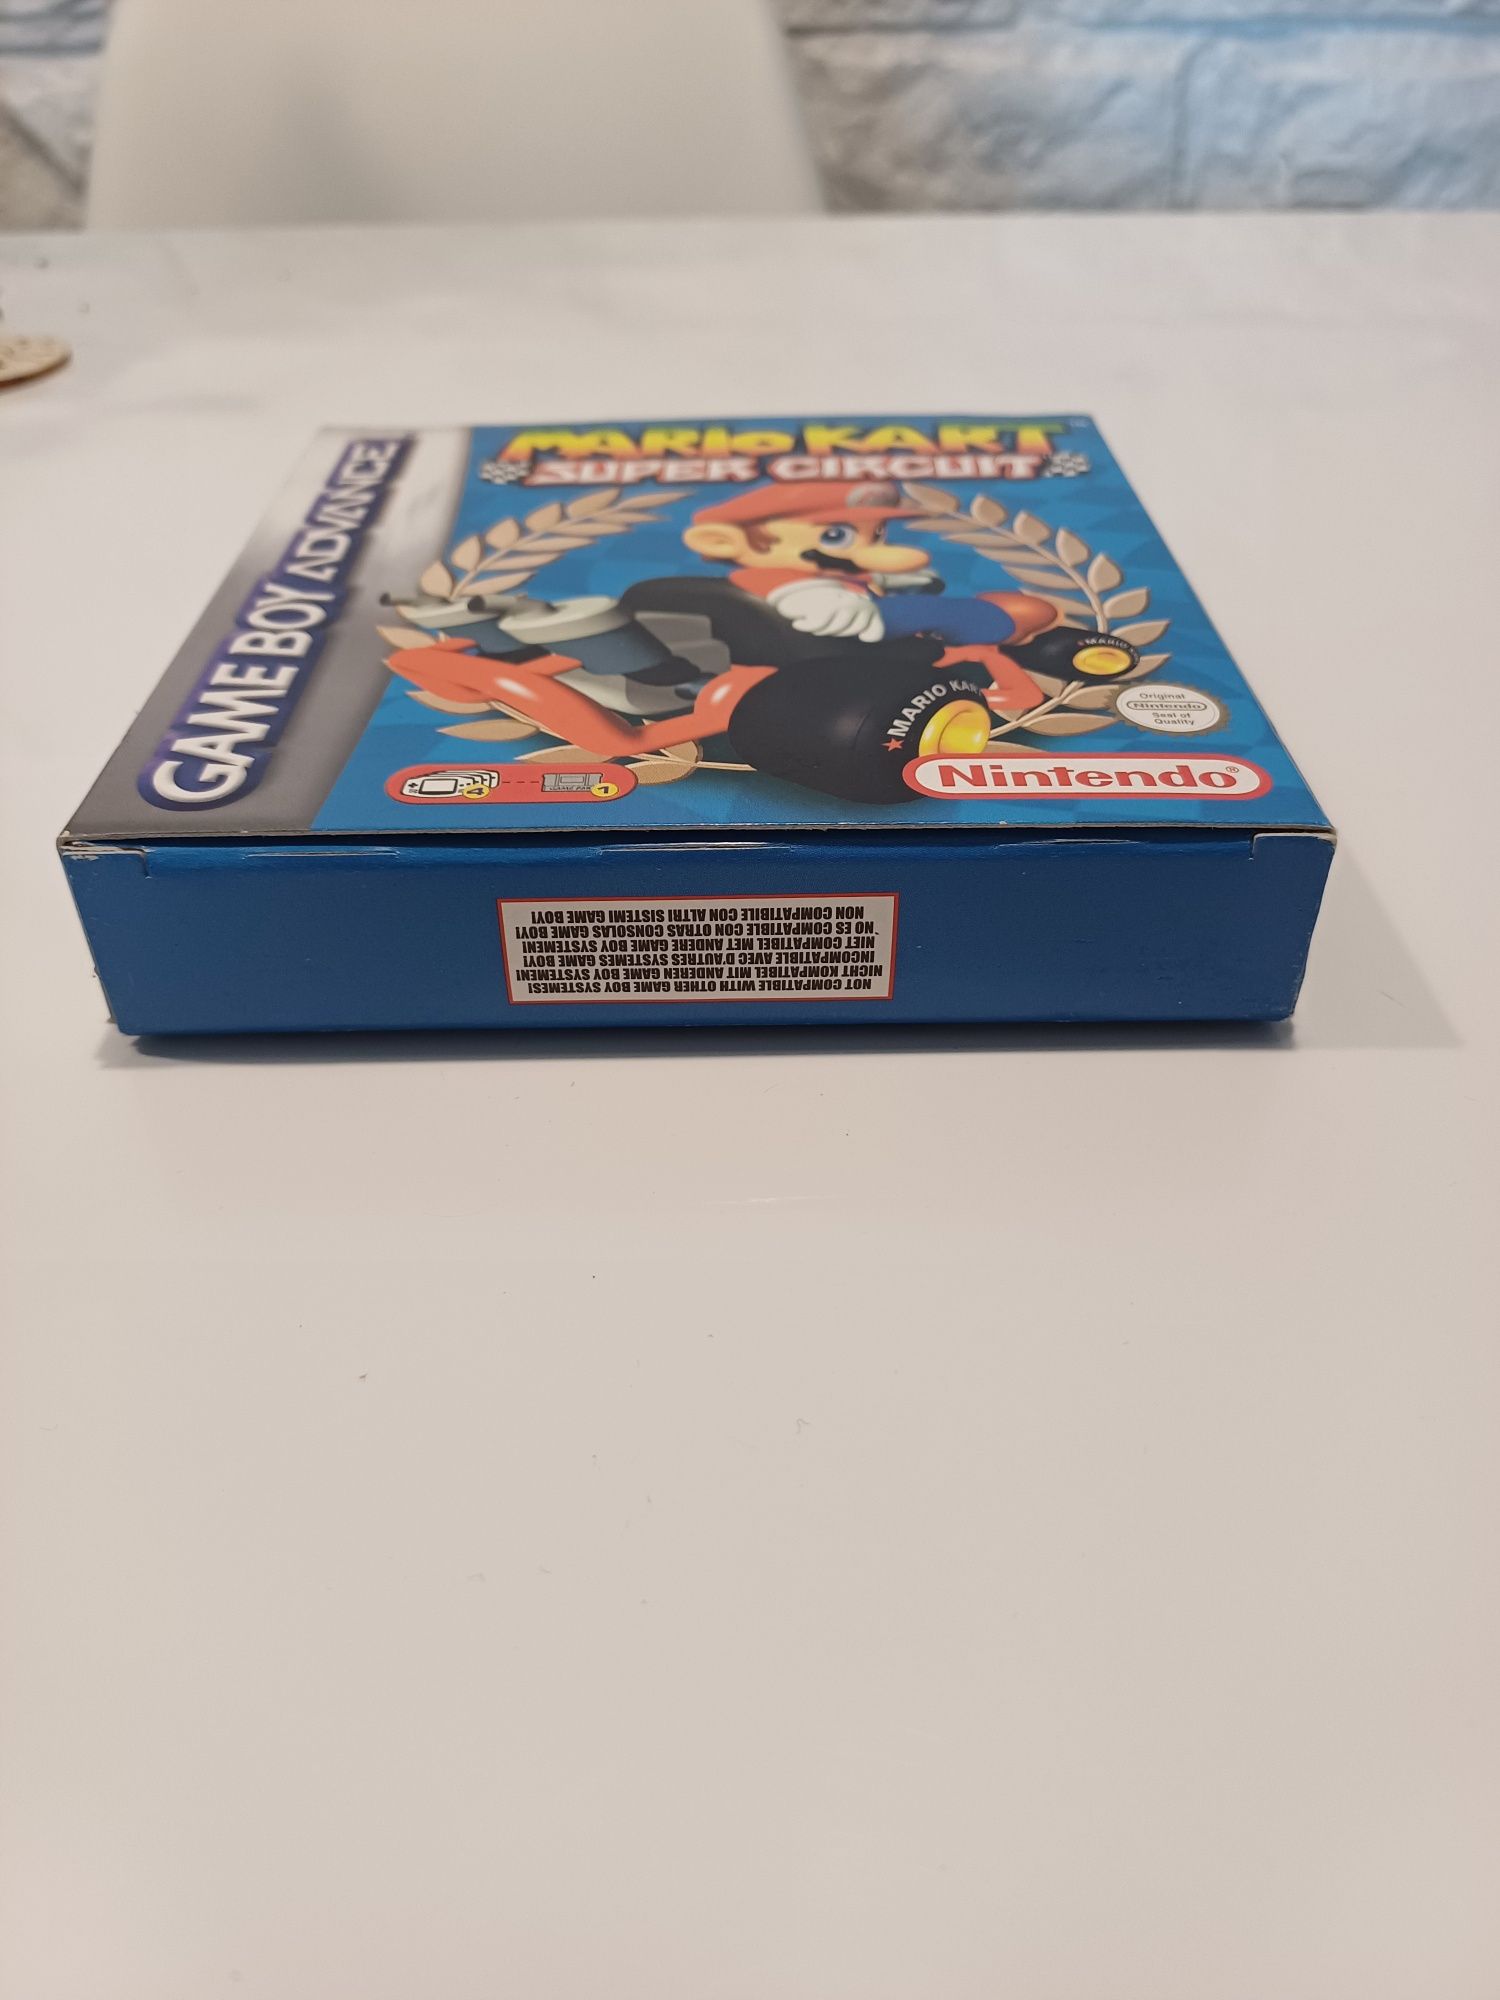 Mario Kart Super Circuit Nintendo Gameboy Advance DS angielska